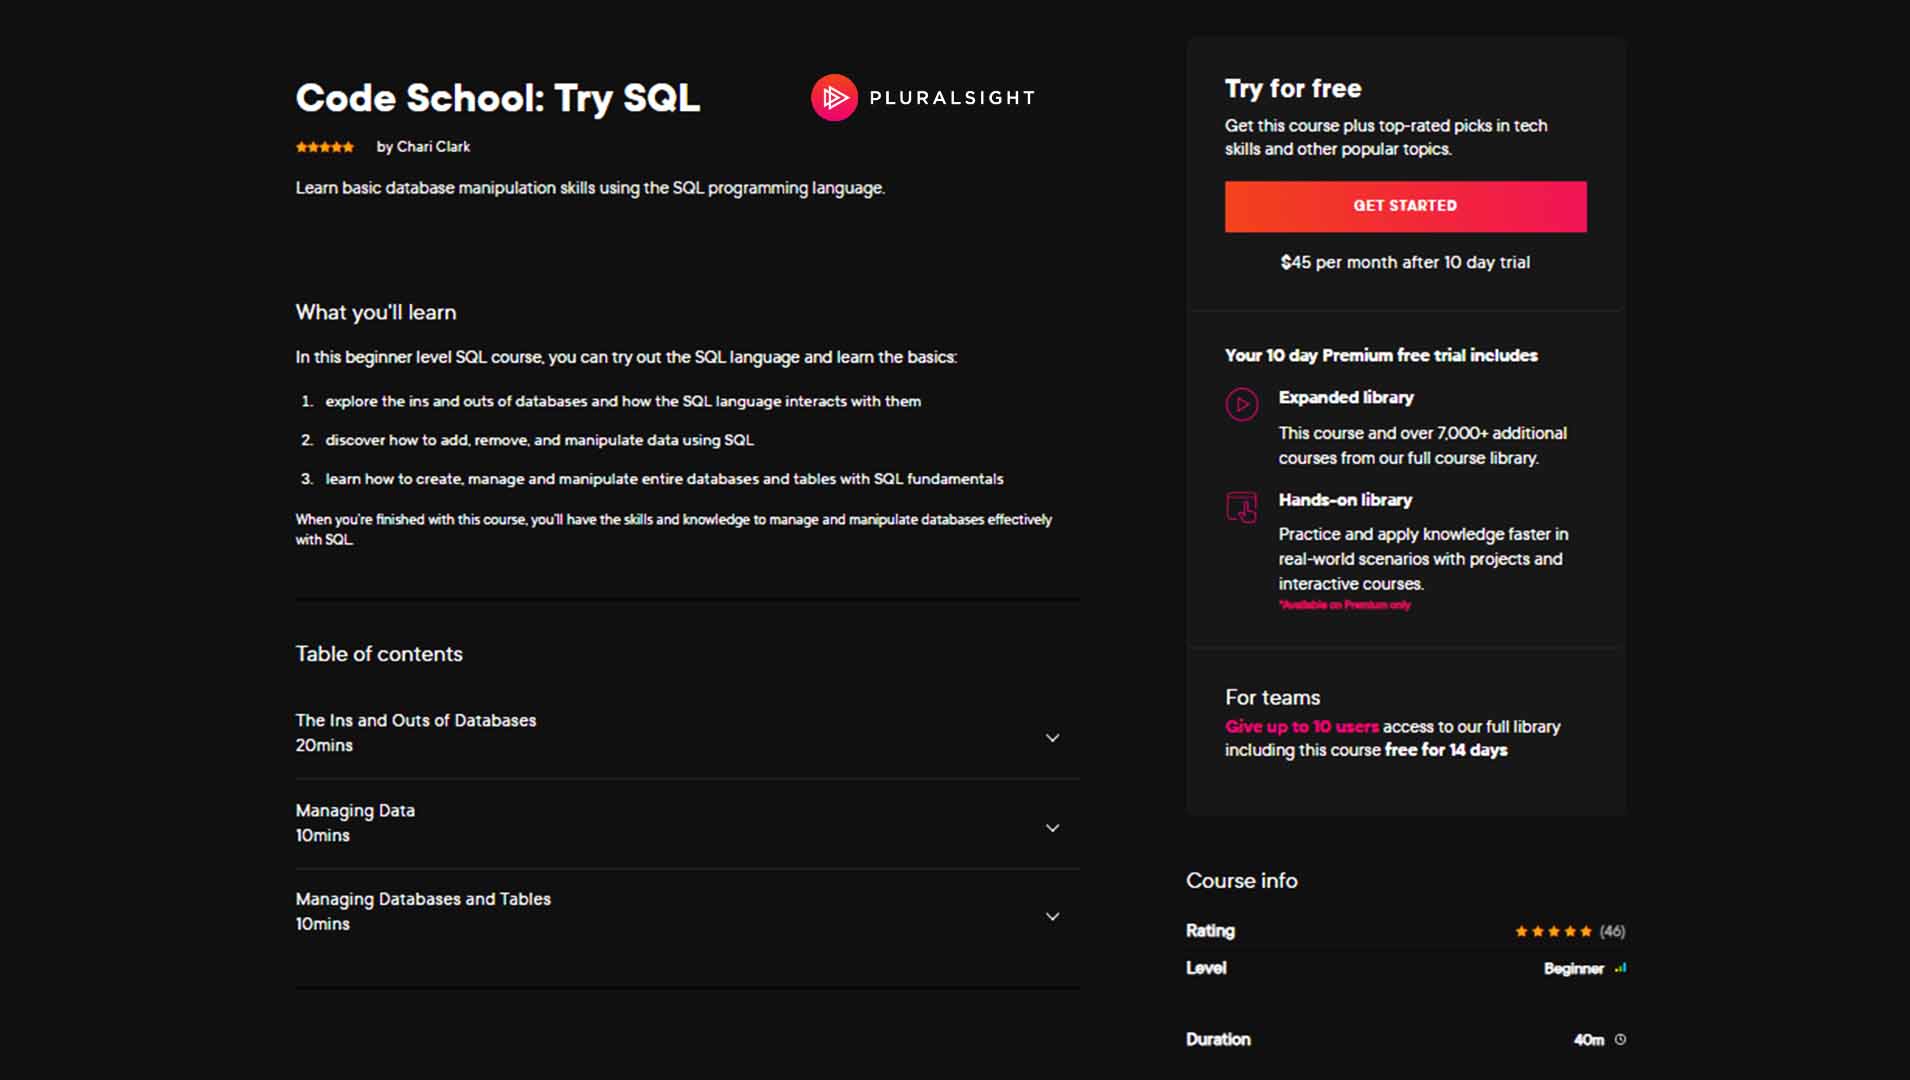 Code School: Try SQL